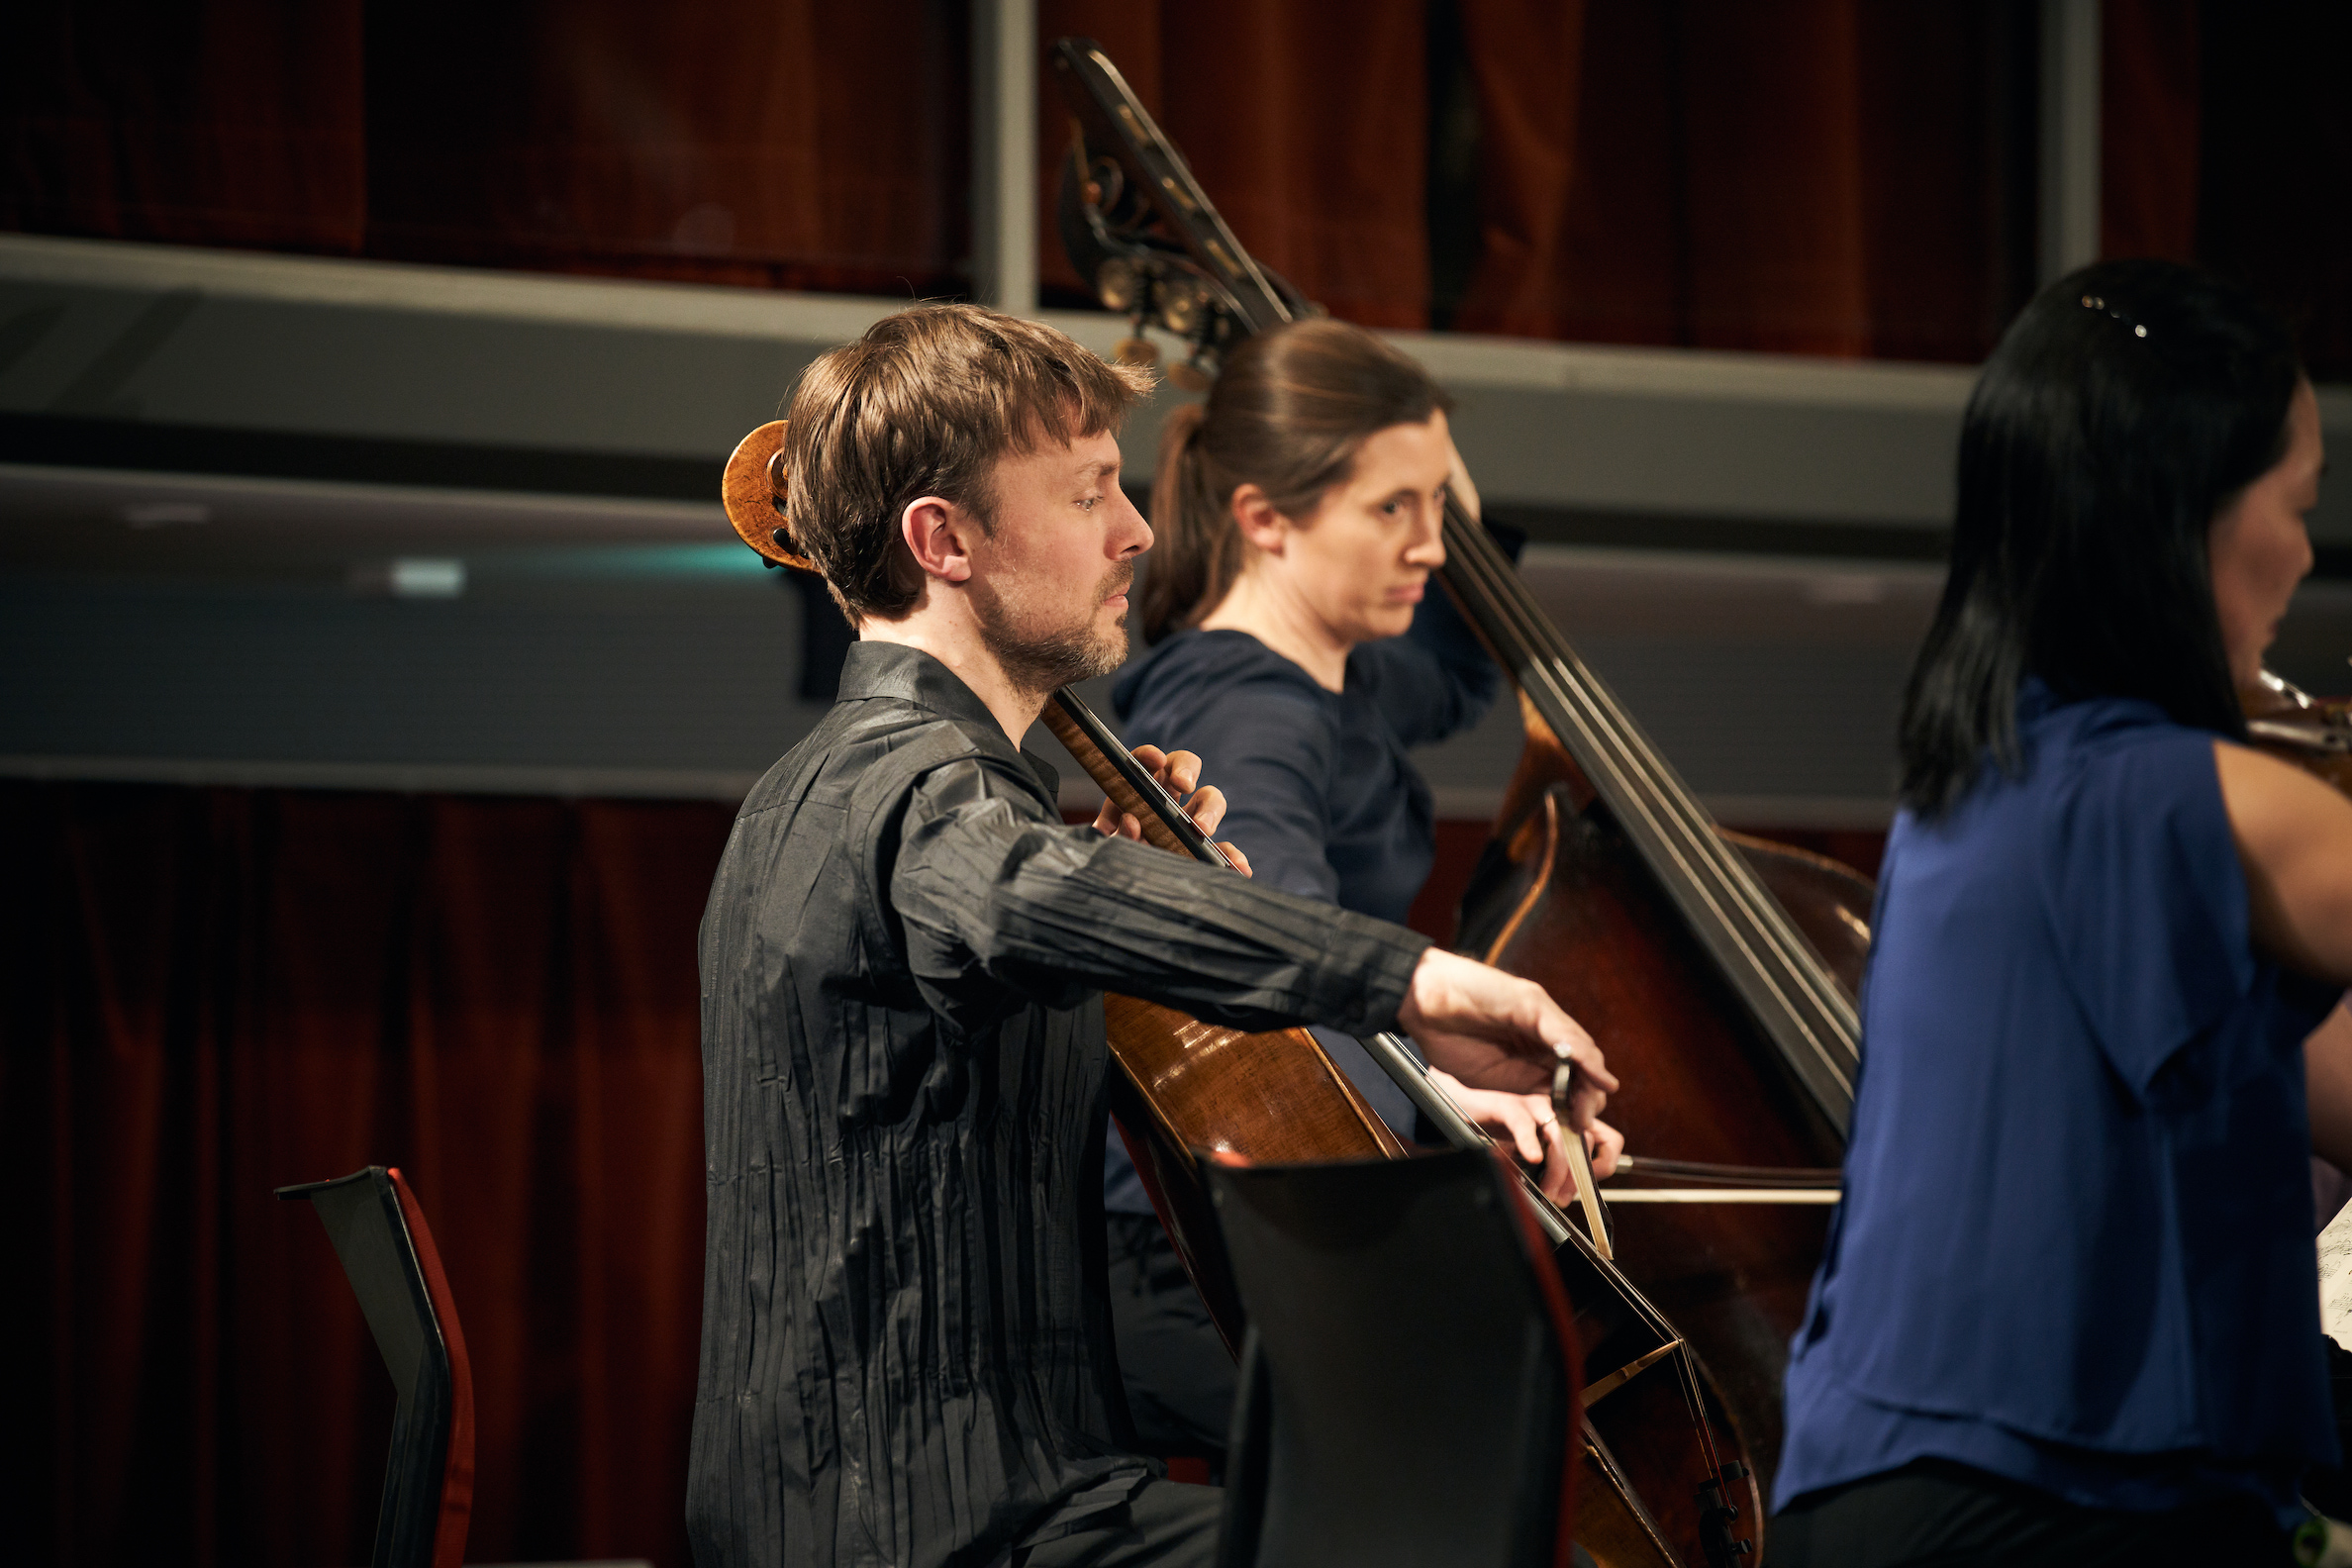 Jérôme Fruchart cello, Georgina Poad double bass, Yoko Kanamaru viola - Remembrance Concert 24 March 2022, Amstelkerk, Amsterdam (Photo: Eduardus Lee)